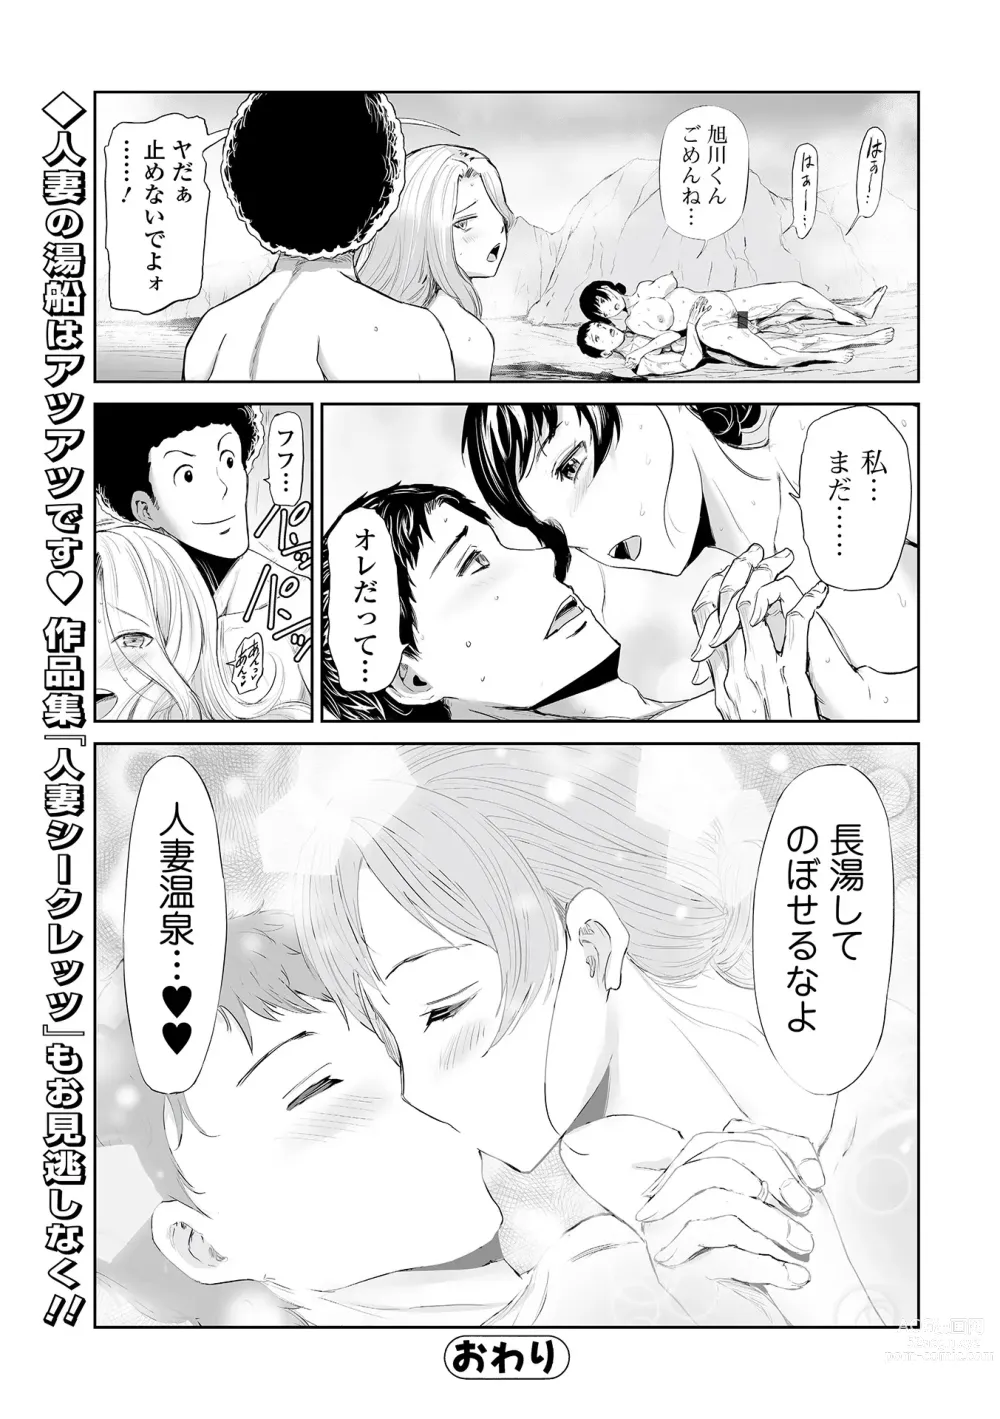 Page 64 of manga Web Comic Toutetsu Vol. 87